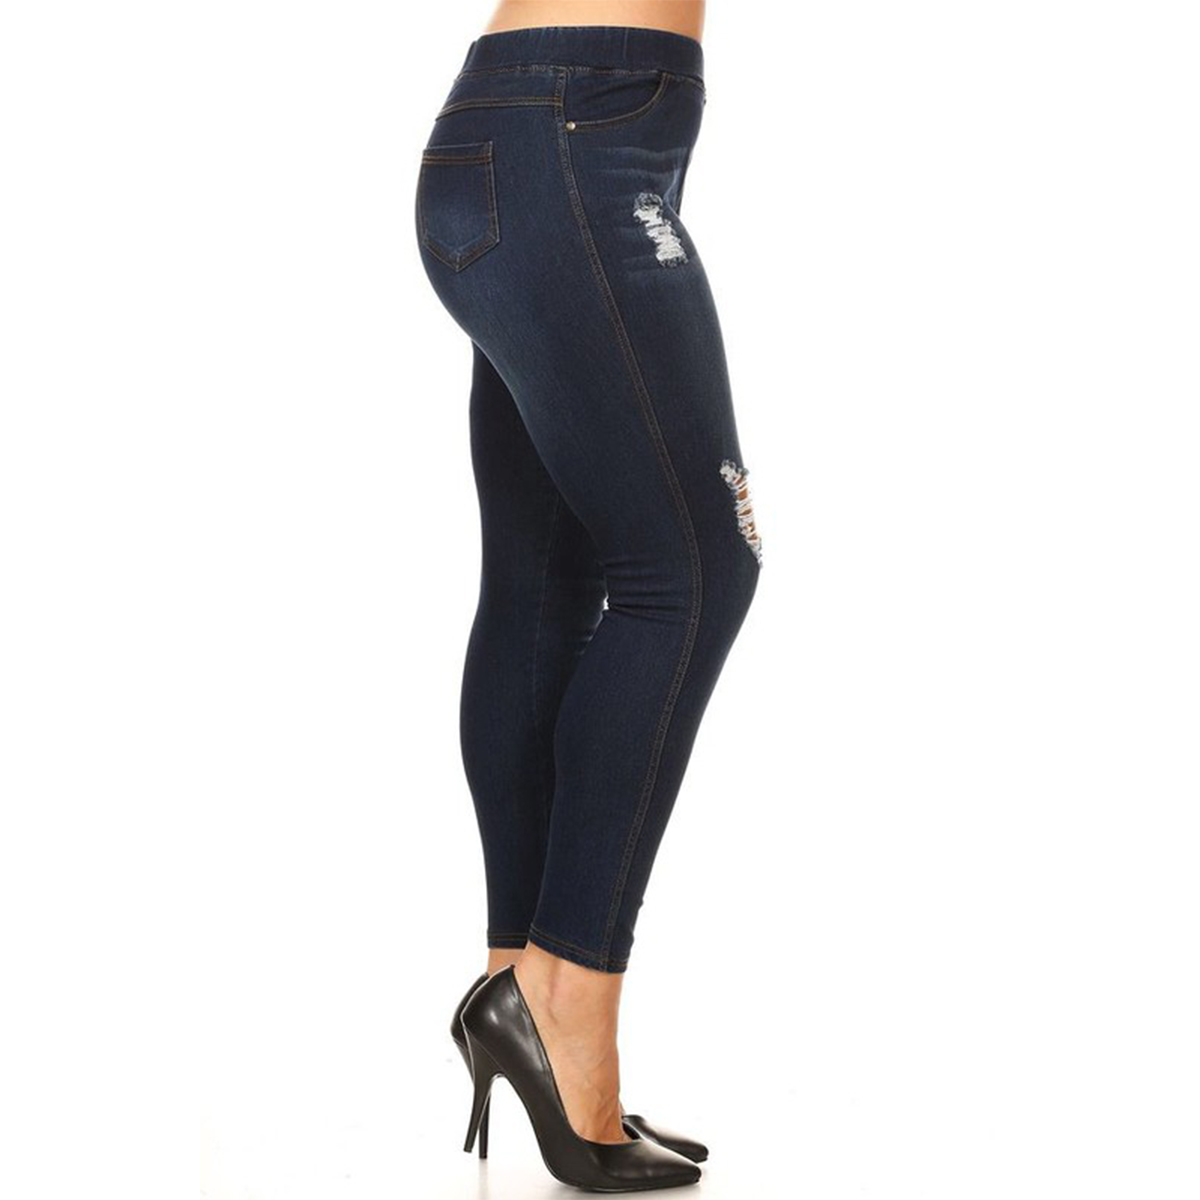 LAVRA Women's True Plus Size Jegging High Waist Jeans Full Length Denim Leggings with Pockets - image 4 of 4